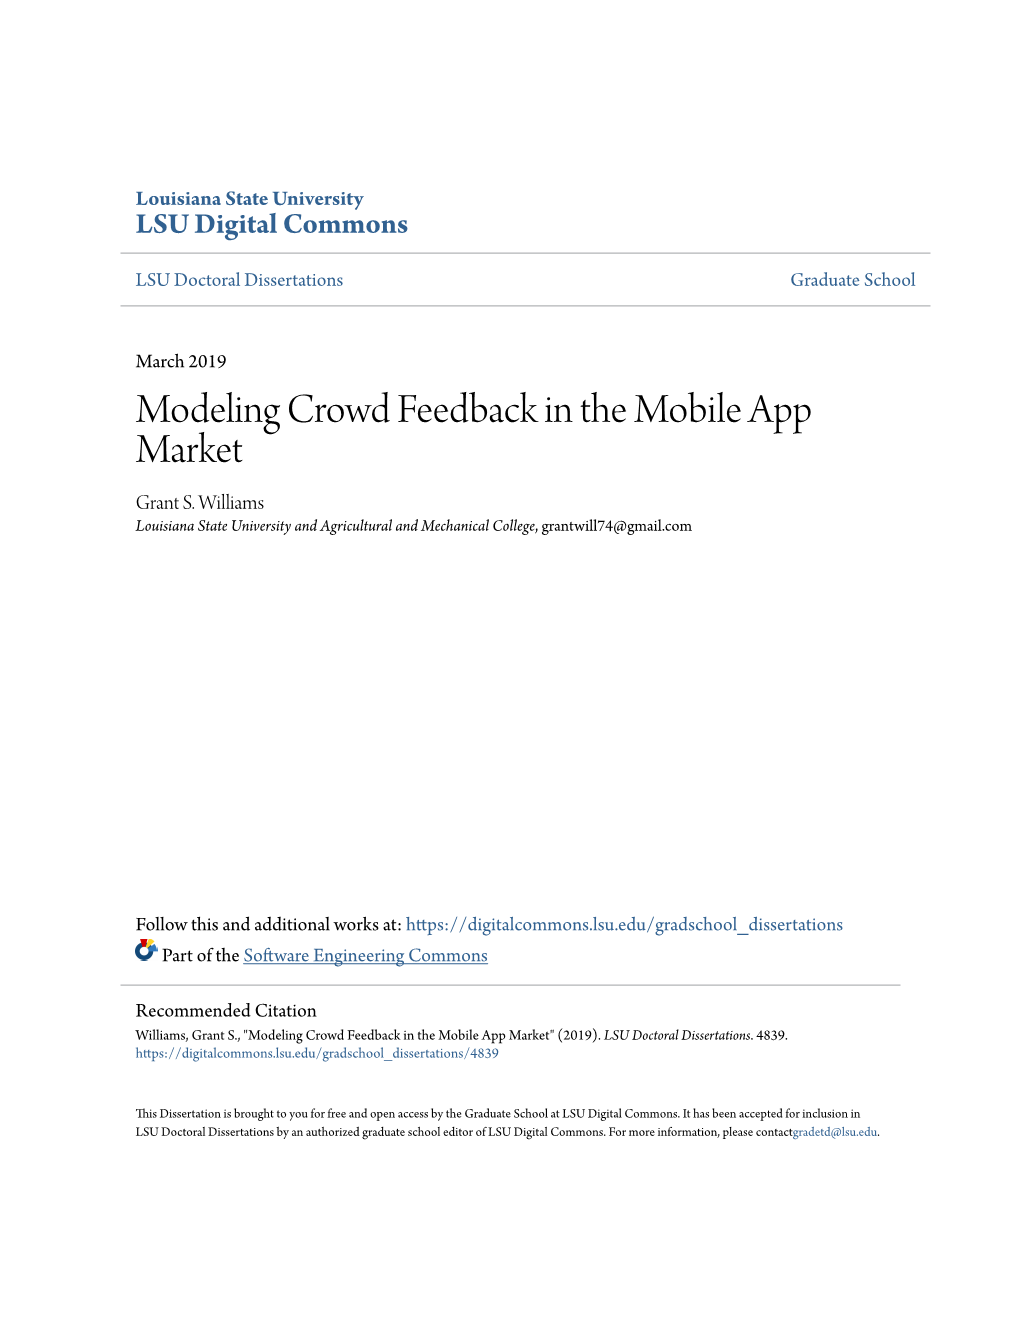 Modeling Crowd Feedback in the Mobile App Market Grant S